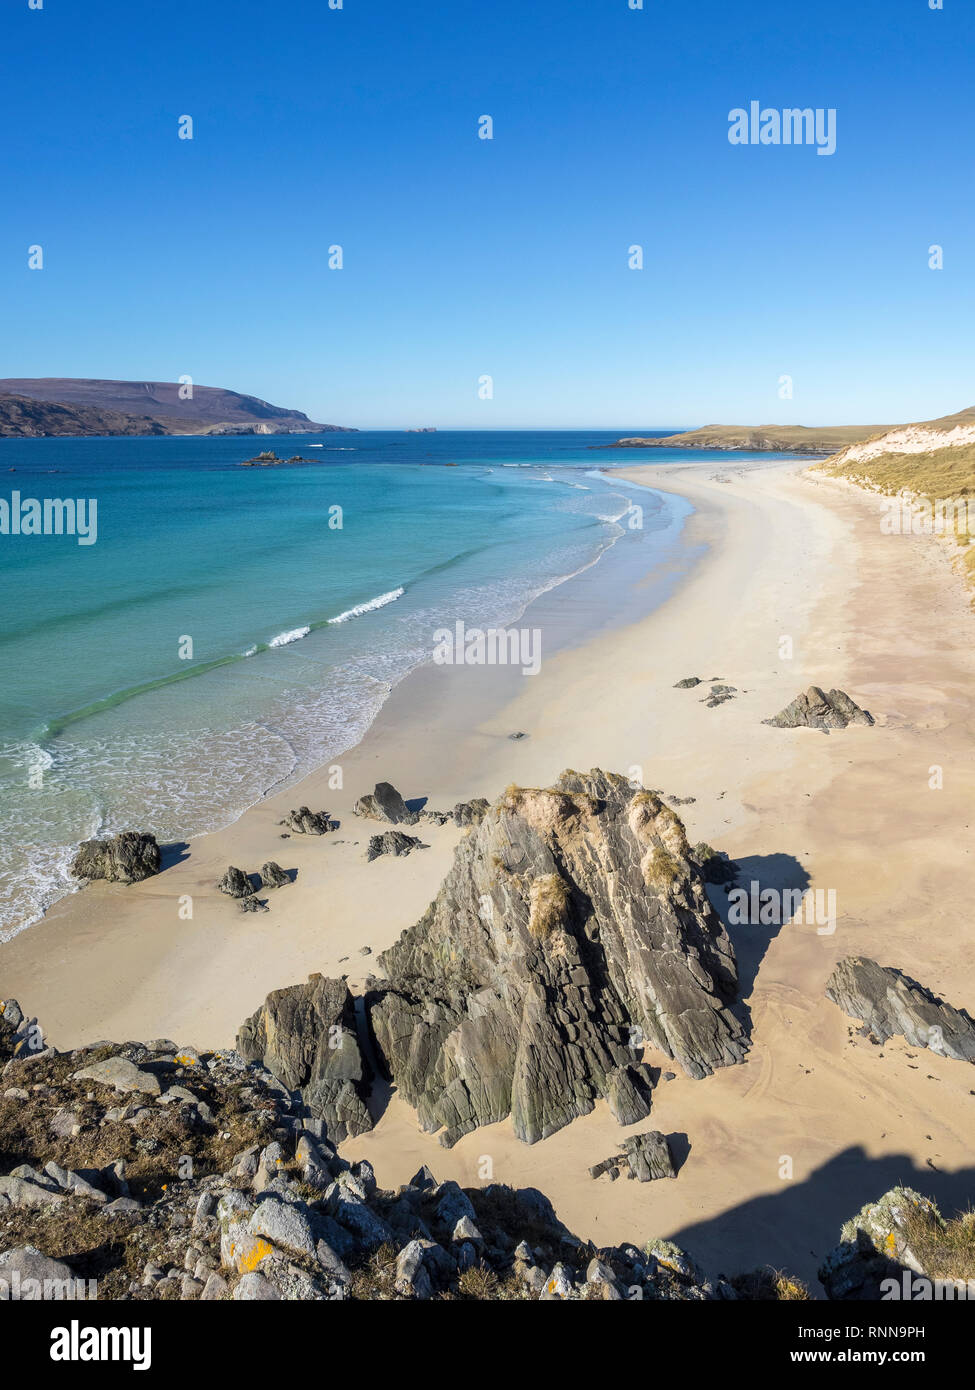 The beach and dunes at An Fharaid, Balnakeil Bay near Durness, Sutherland, Scotland Stock Photo